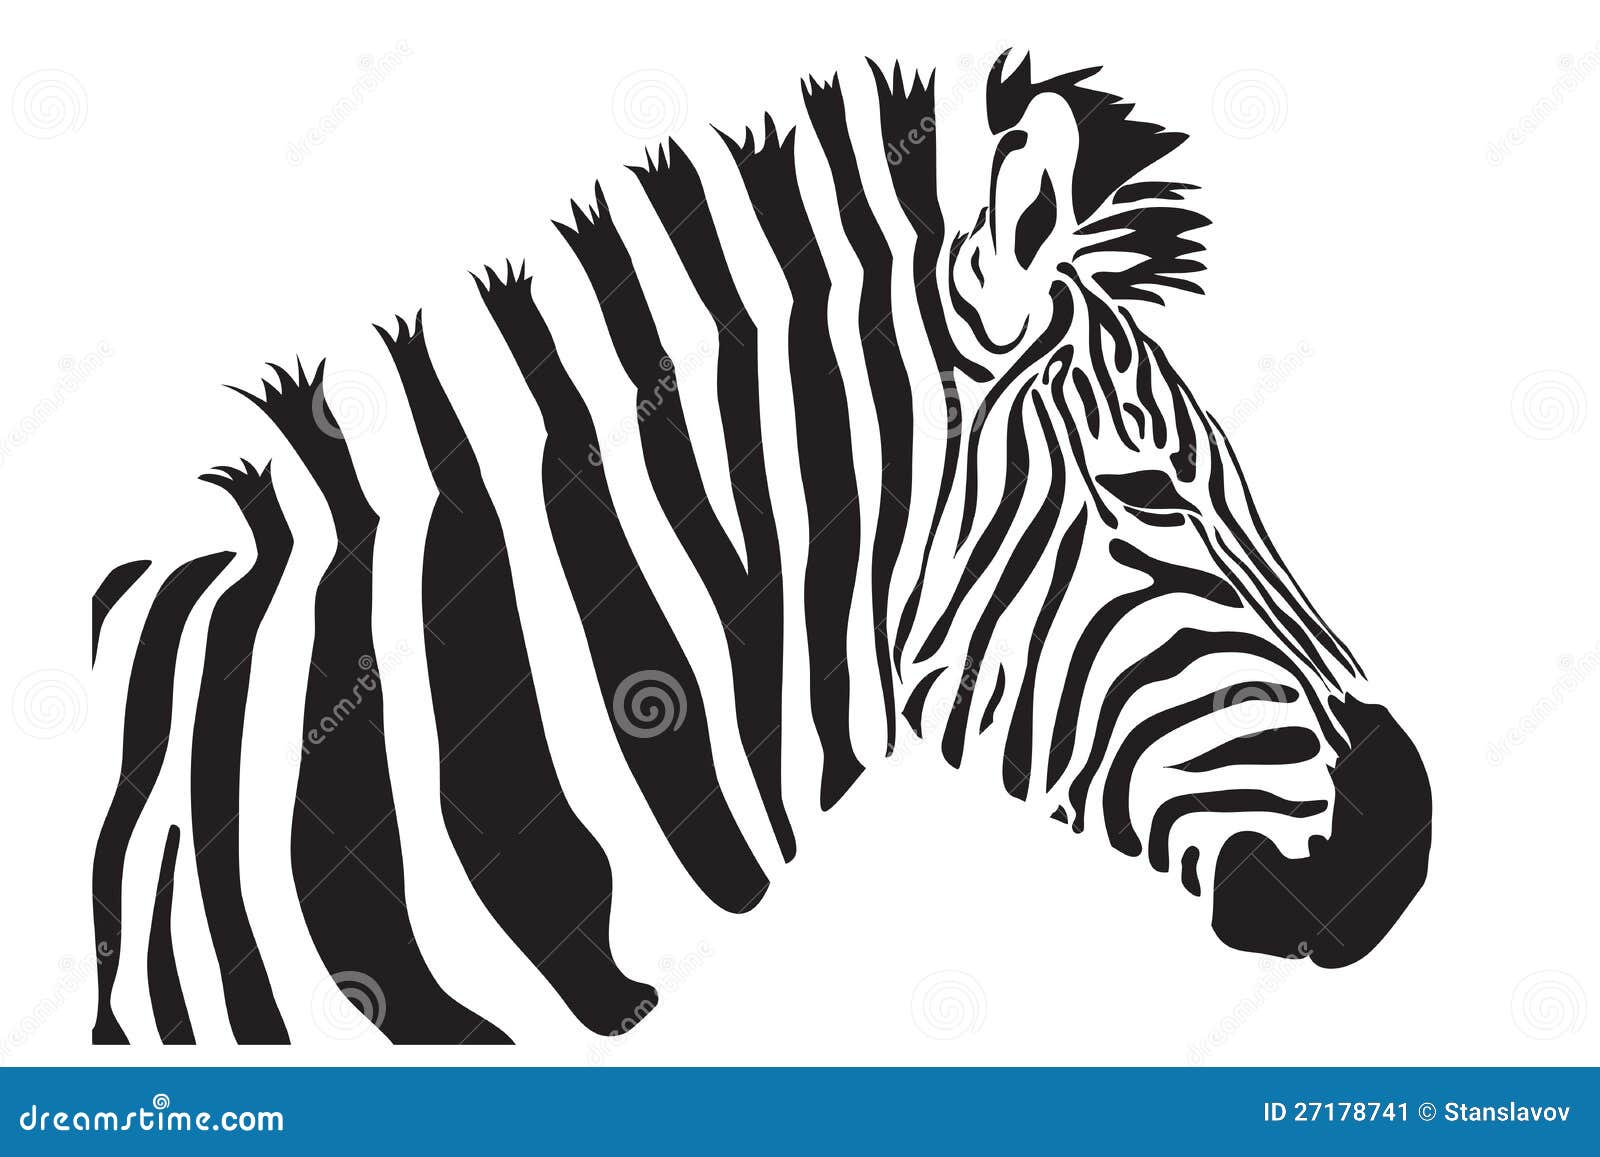 zebra head clipart - photo #45